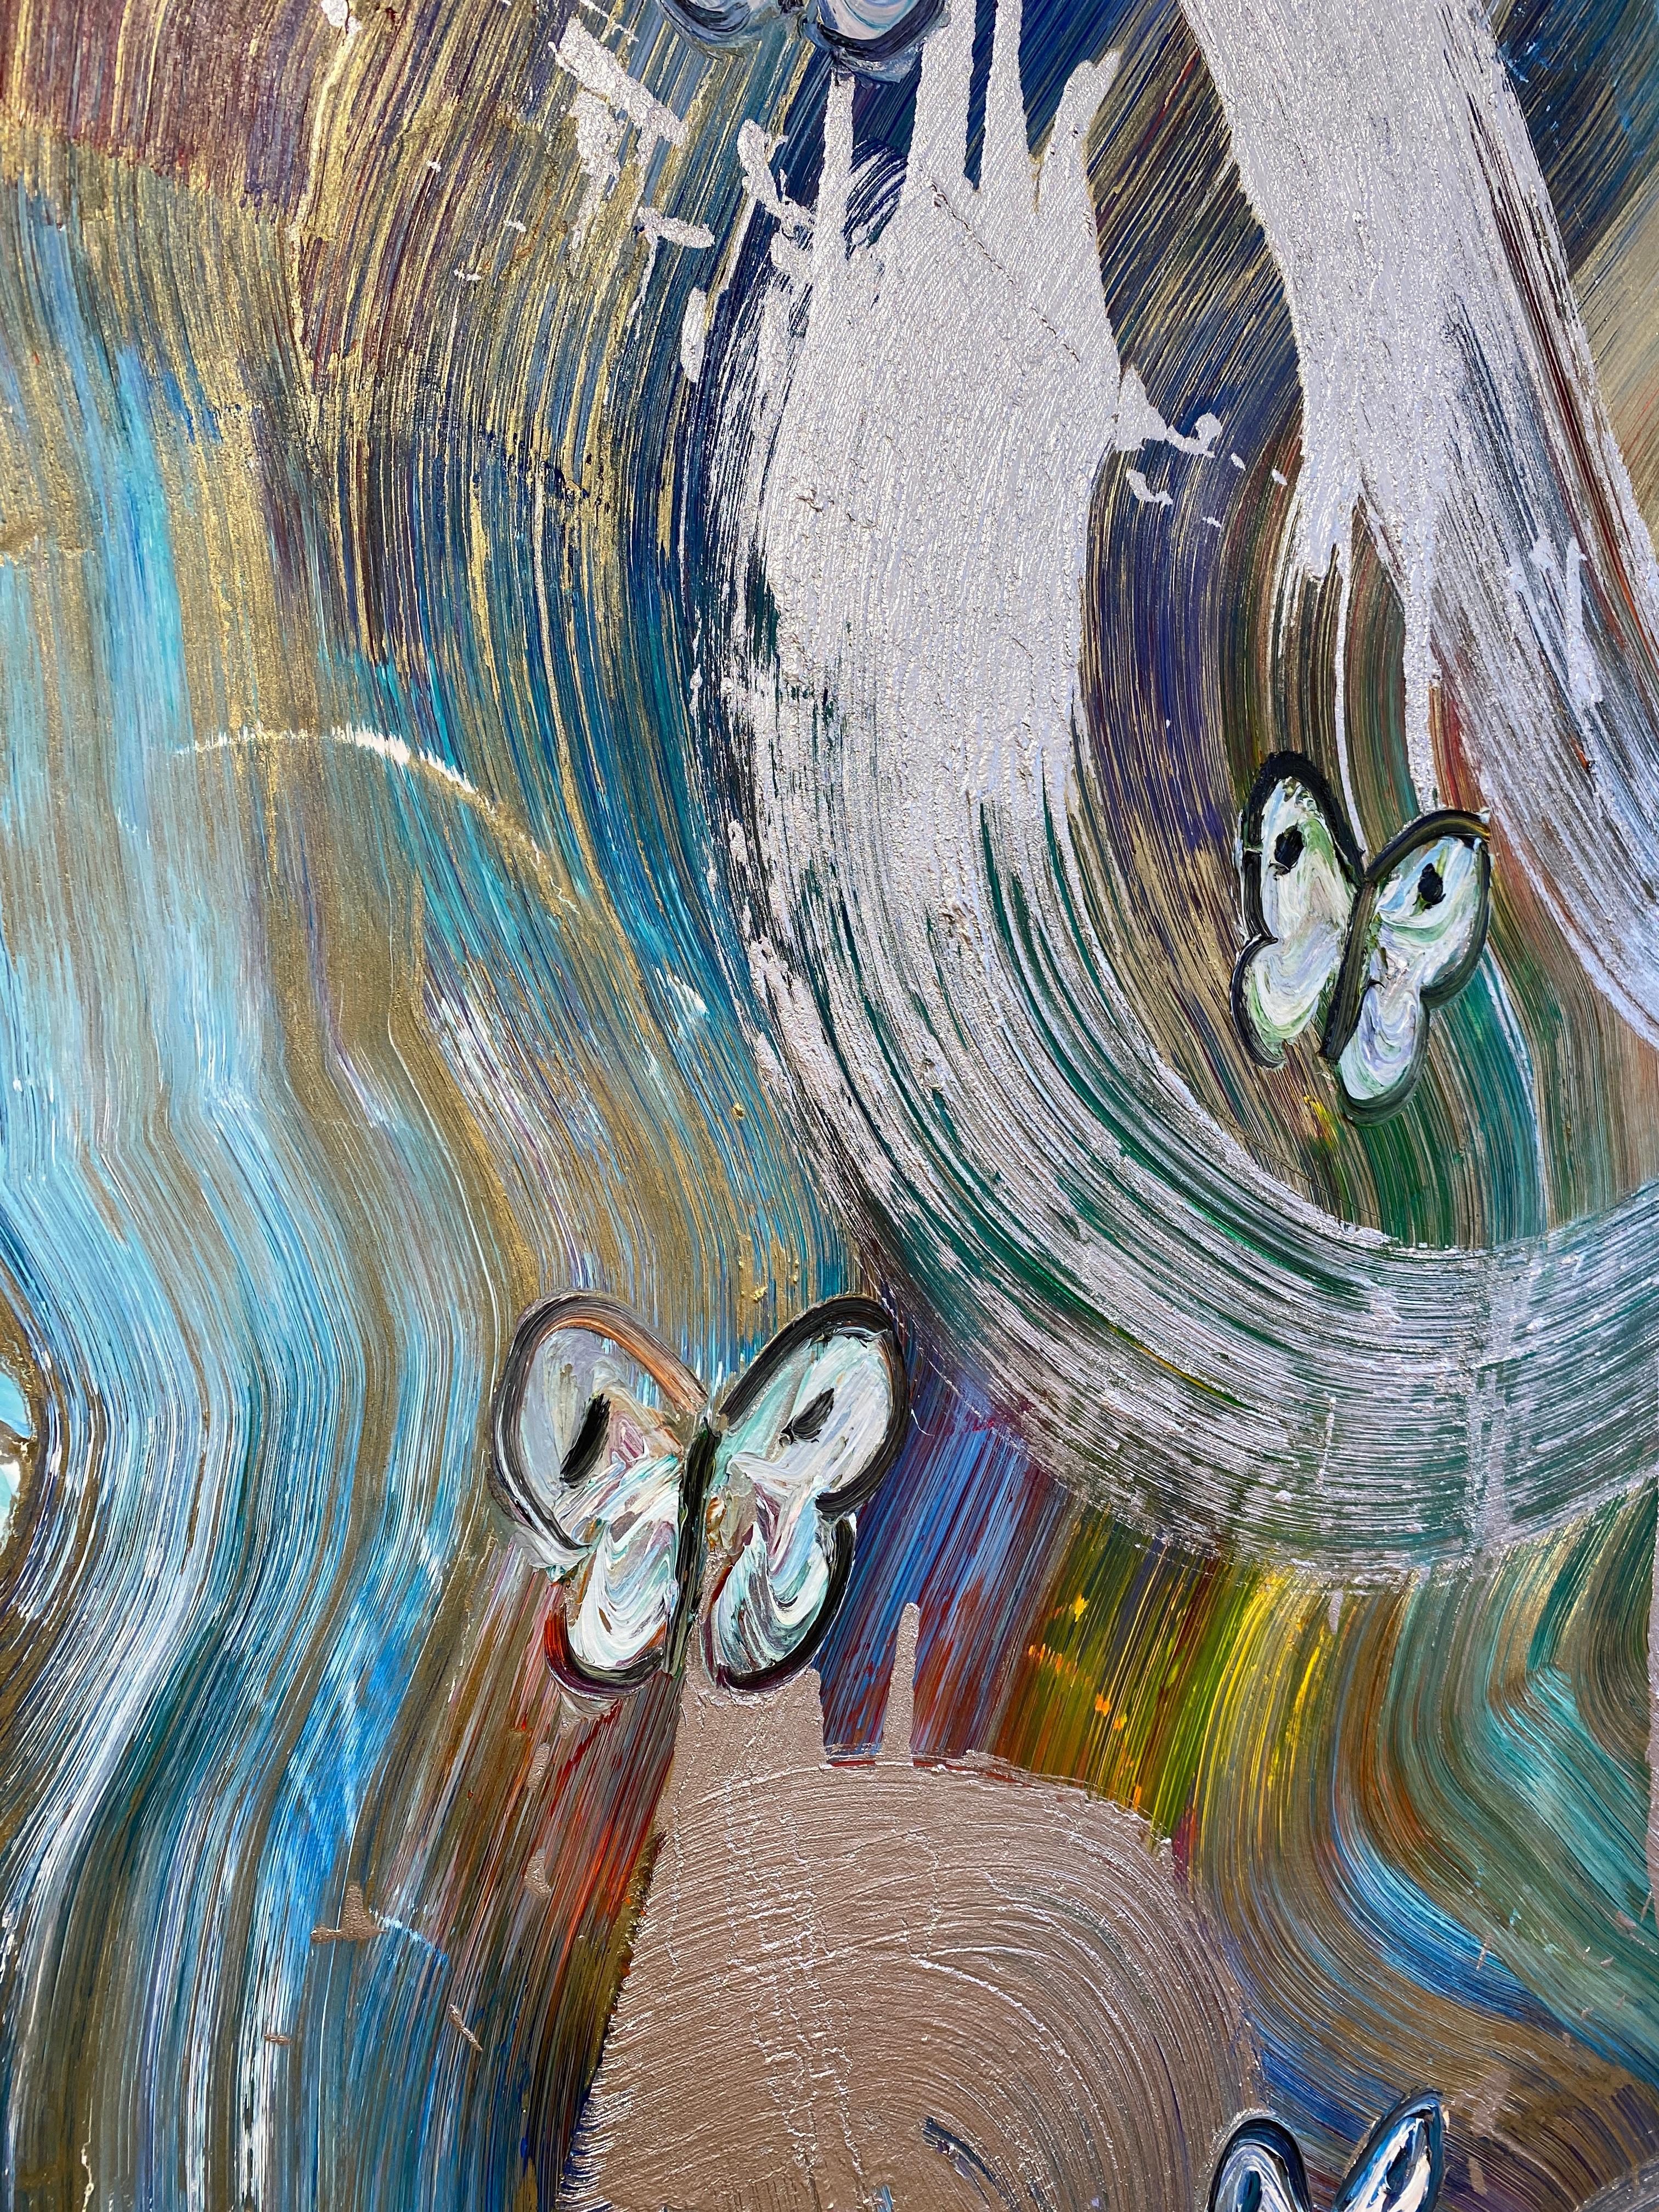 Artist:  Slonem, Hunt
Title:  The Wind
Series:  Butterflies
Date:  2020
Medium:  Oil on canvas
Unframed Dimensions:  60